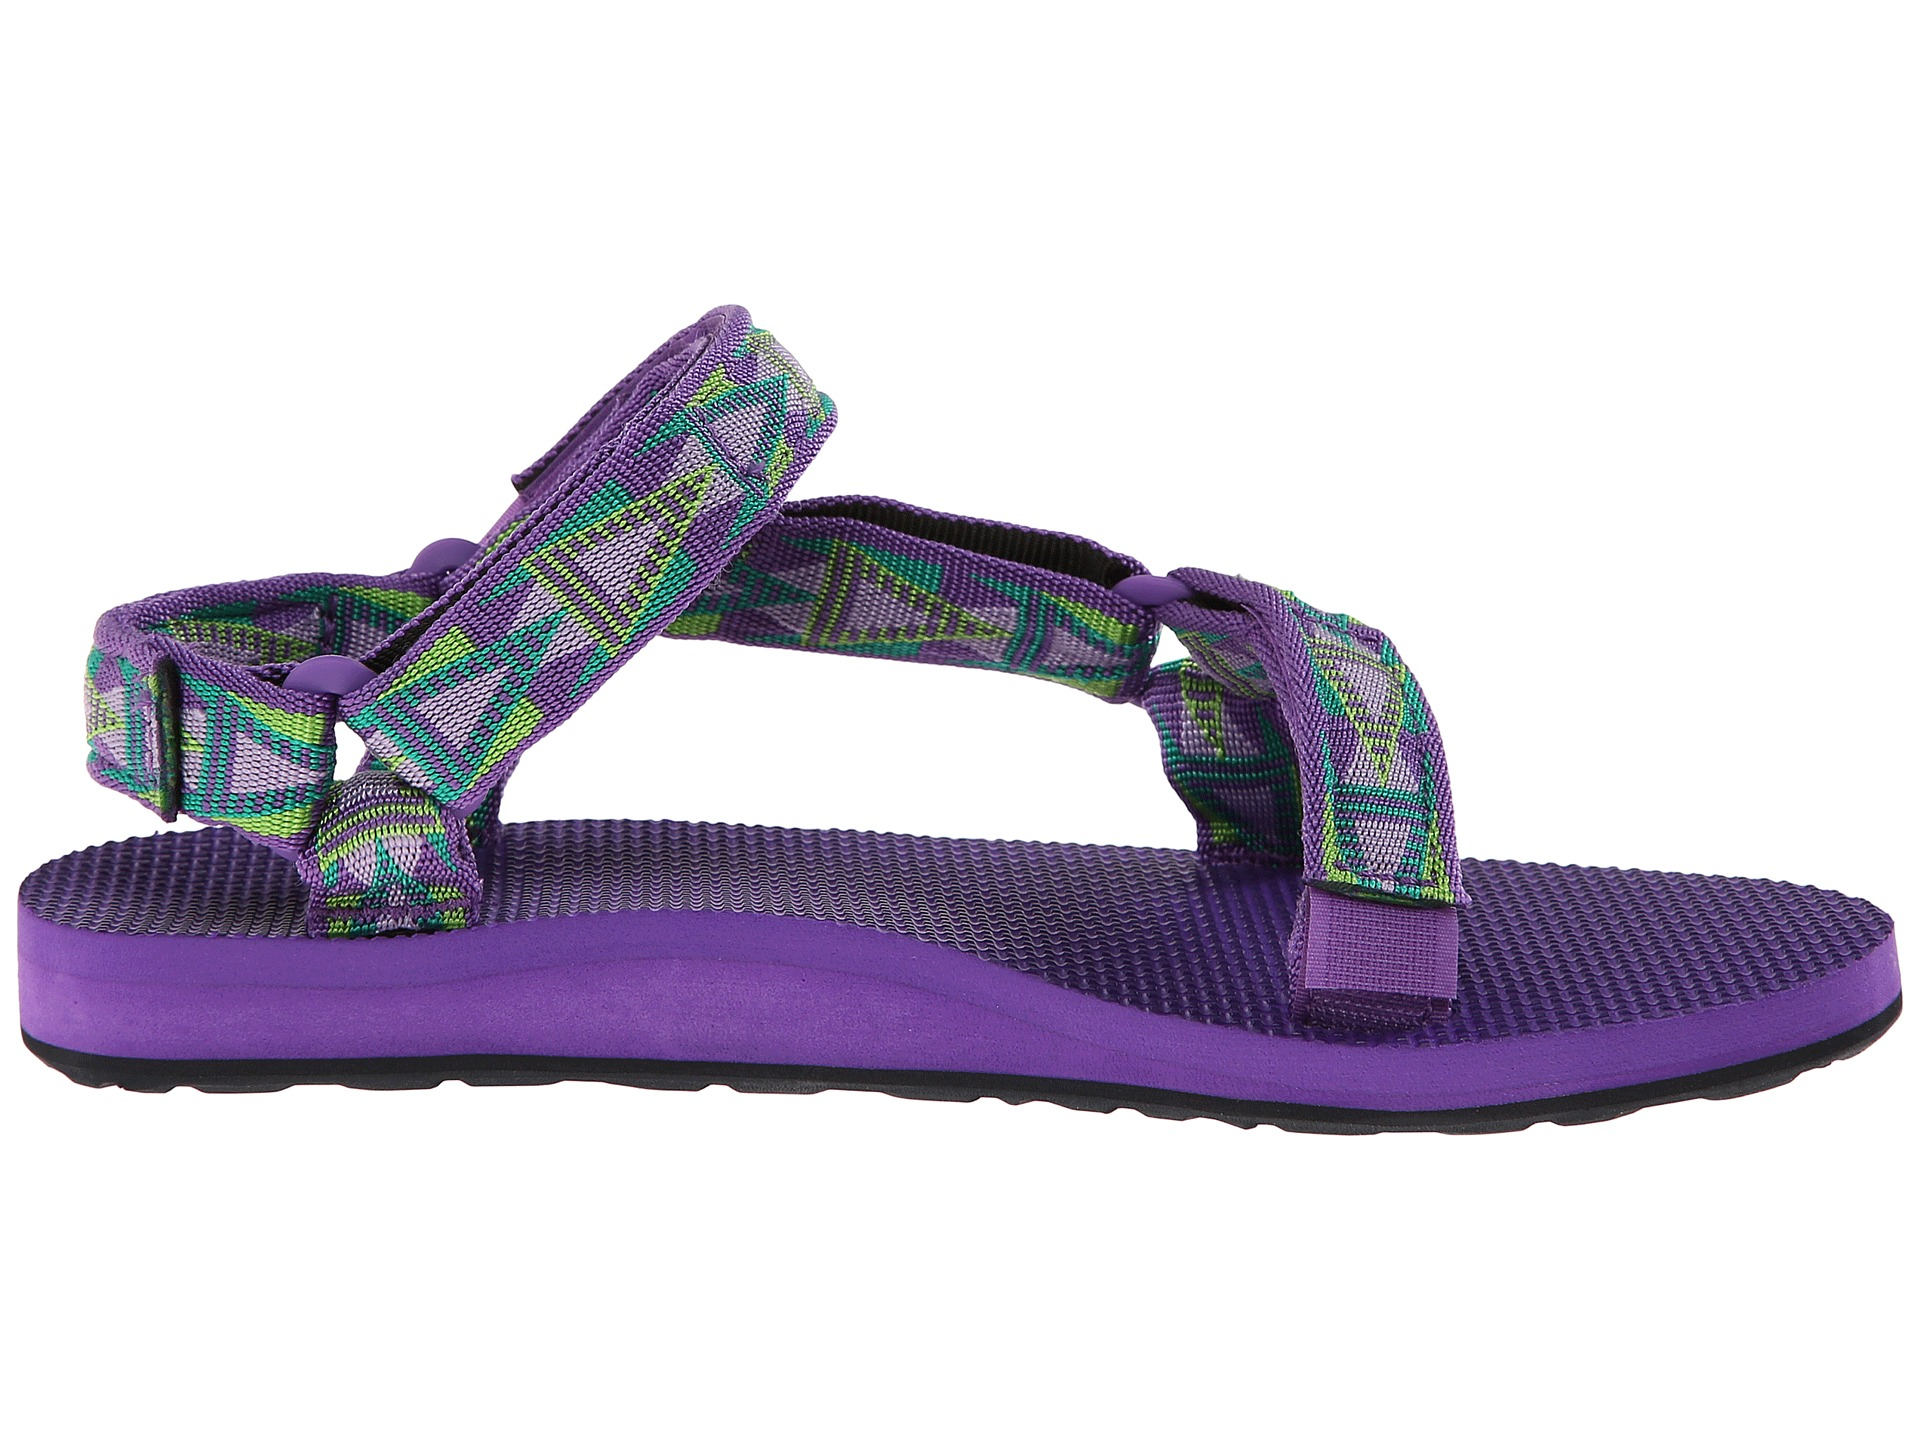 Teva Original Universal Sea Fog Flat Sandals in Purple - Lyst